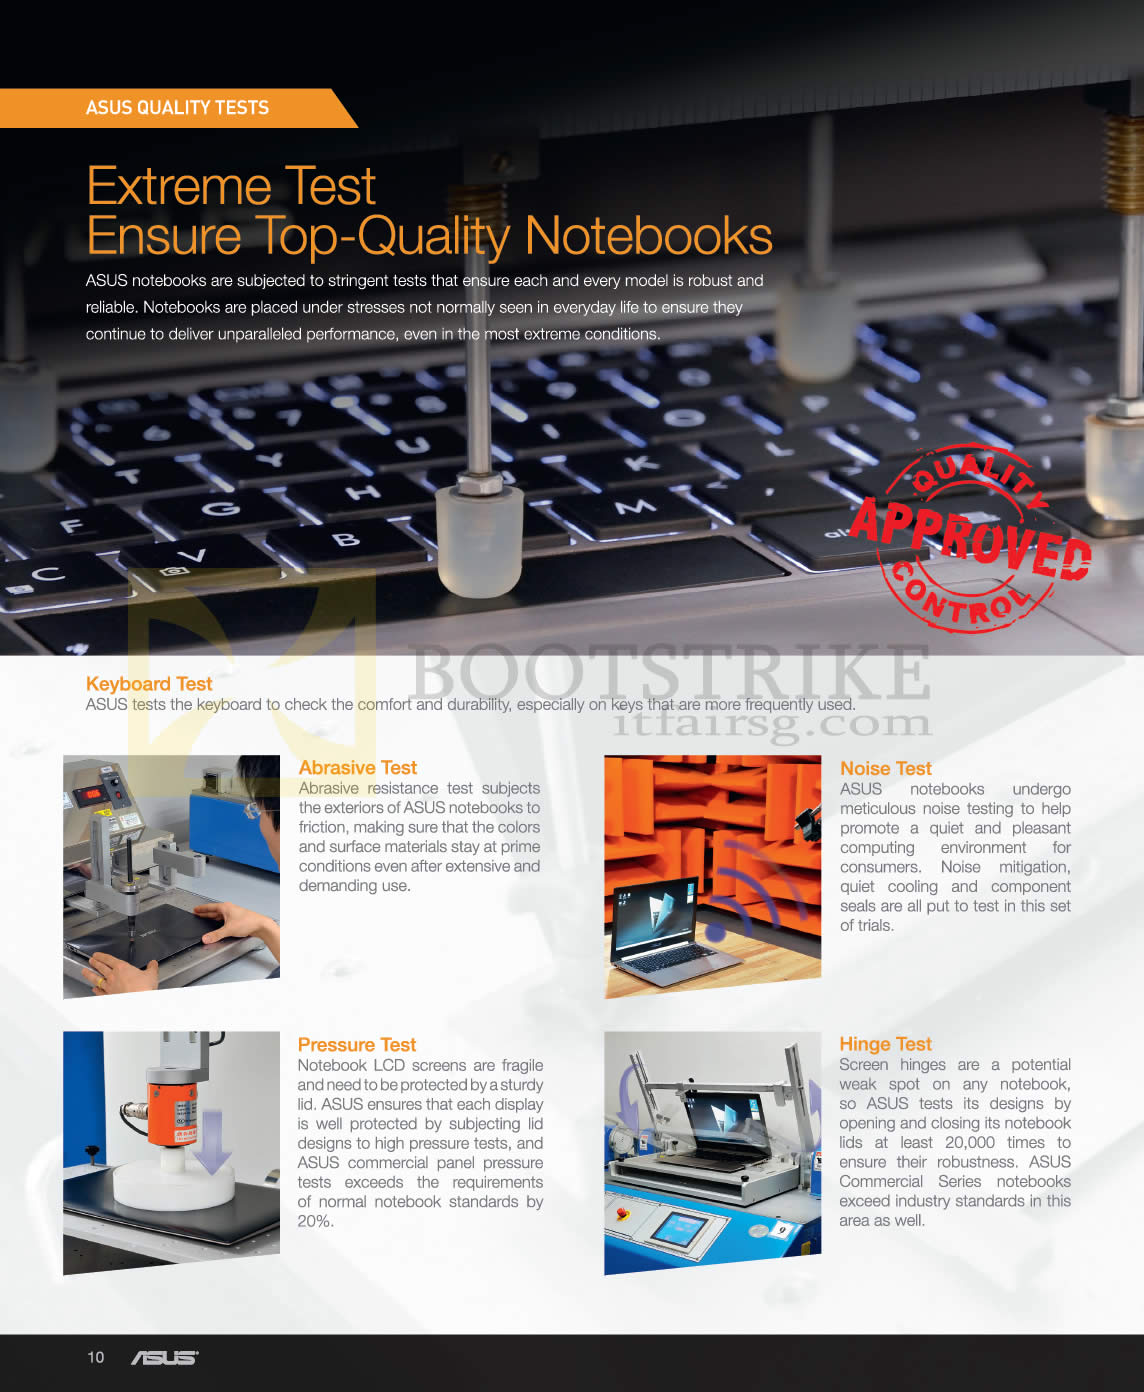 SITEX 2012 price list image brochure of ASUS Quality Tests, Keyboard, Abrasive, Noise, Pressure, Hinge